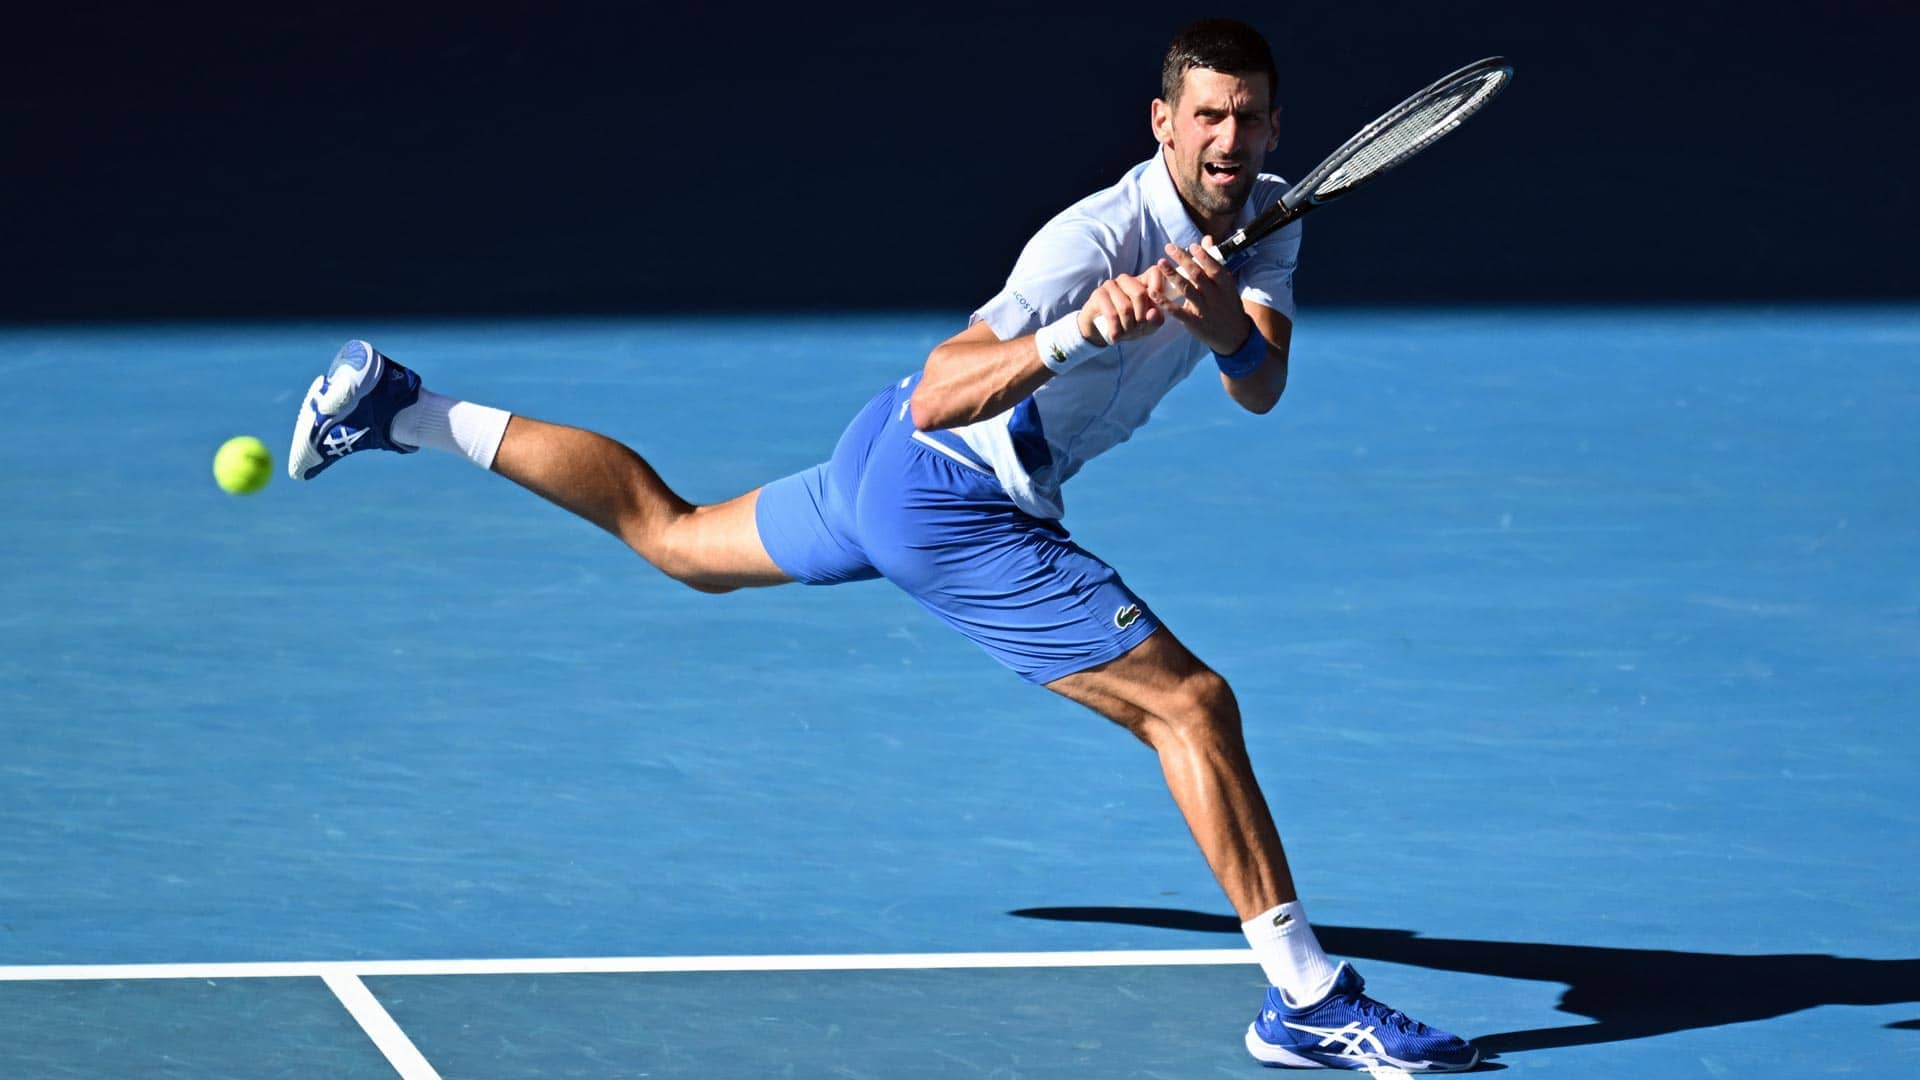 Novak Djokovic secured his first break against Taylor Fritz on his 16th break point.